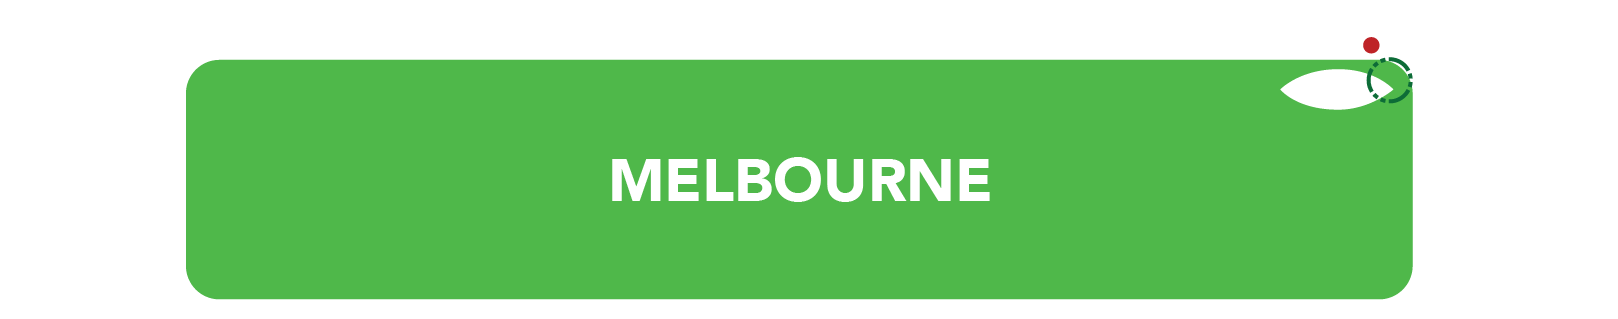 Melbourne advance turf icon